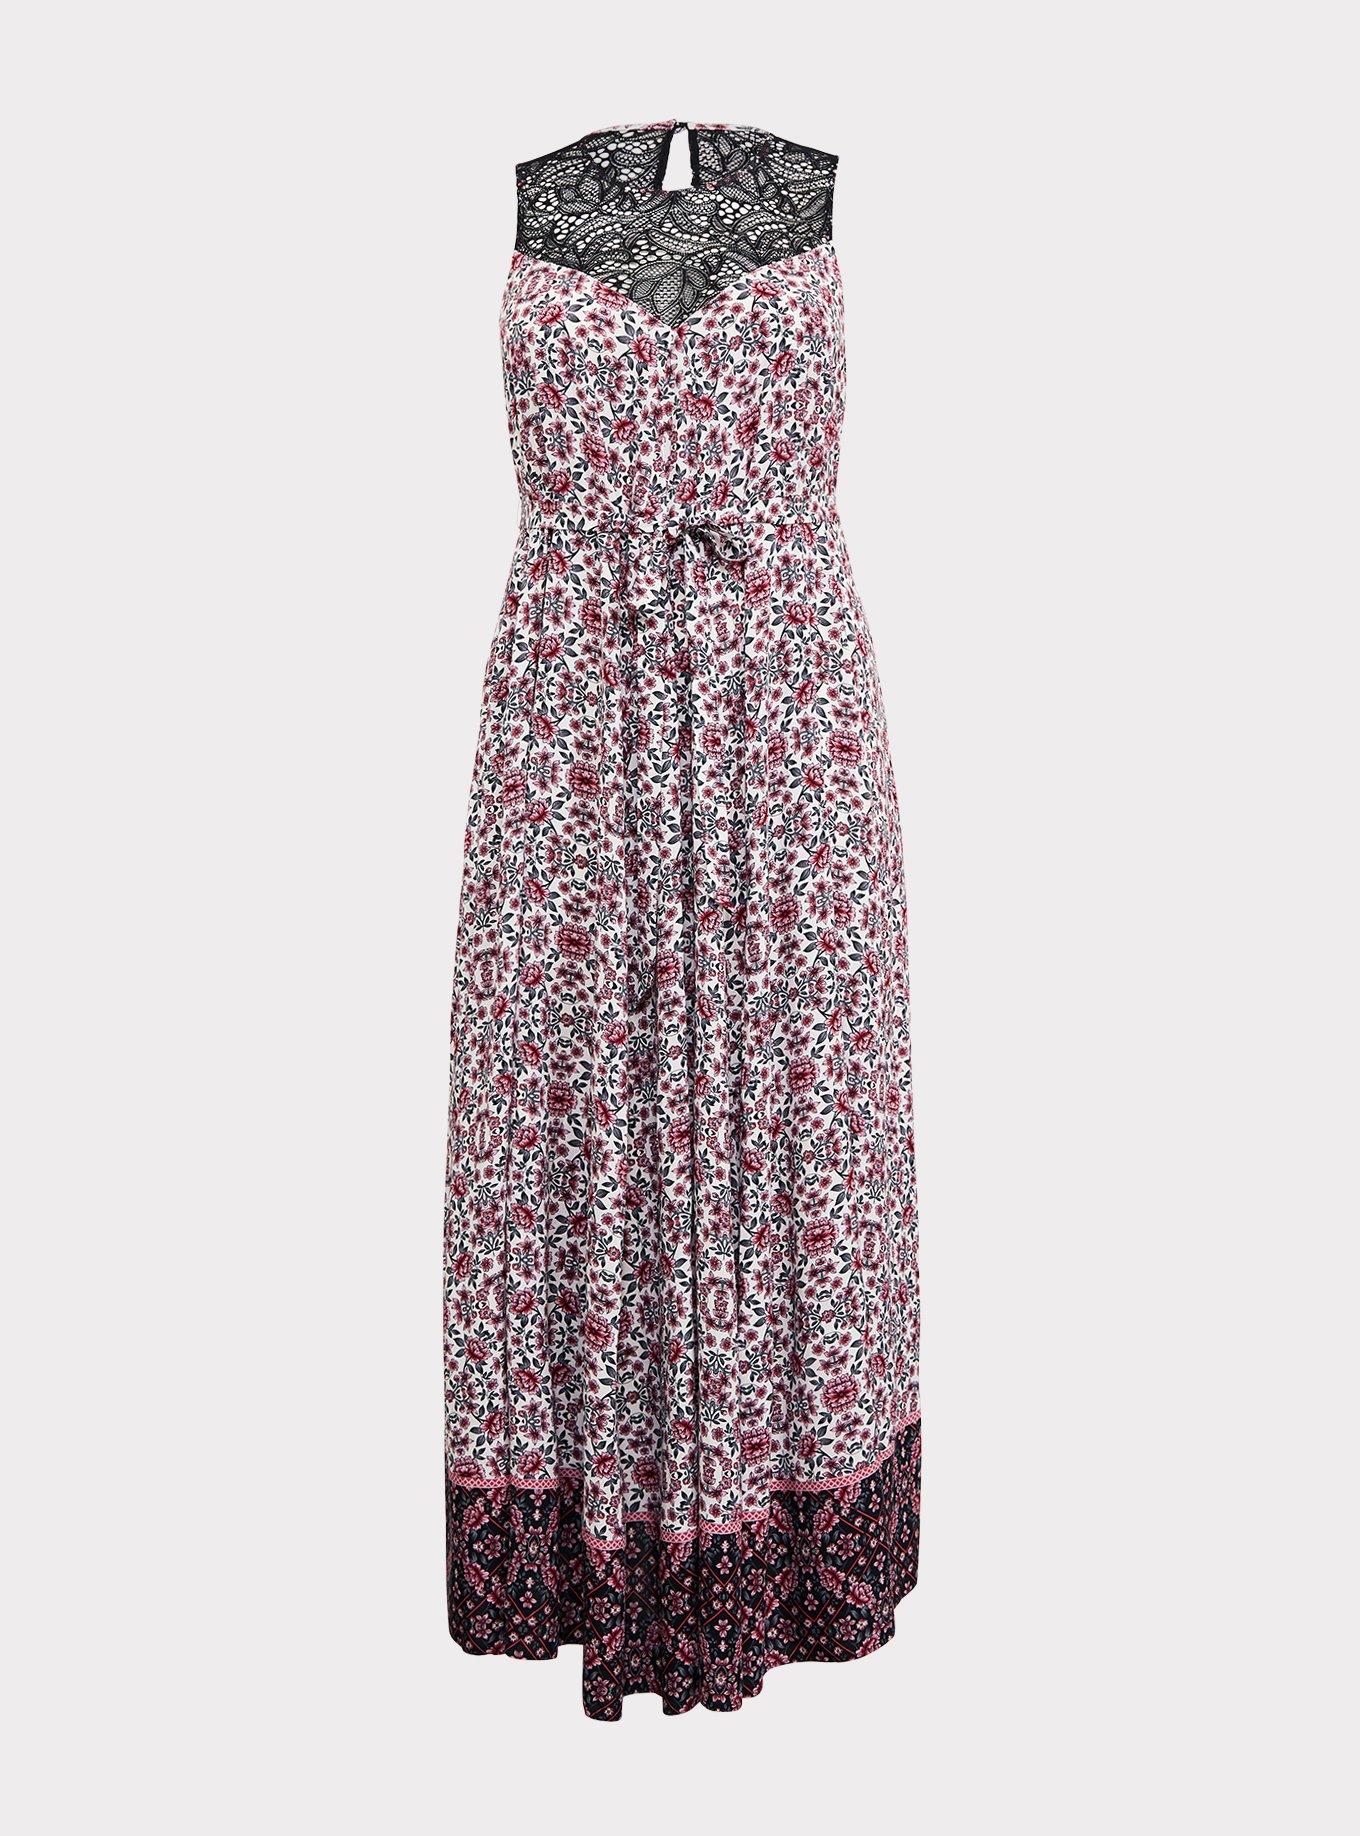 Plus Size - Pink Floral Mixed Print Lace Yoke Challis Maxi Dress - Torrid